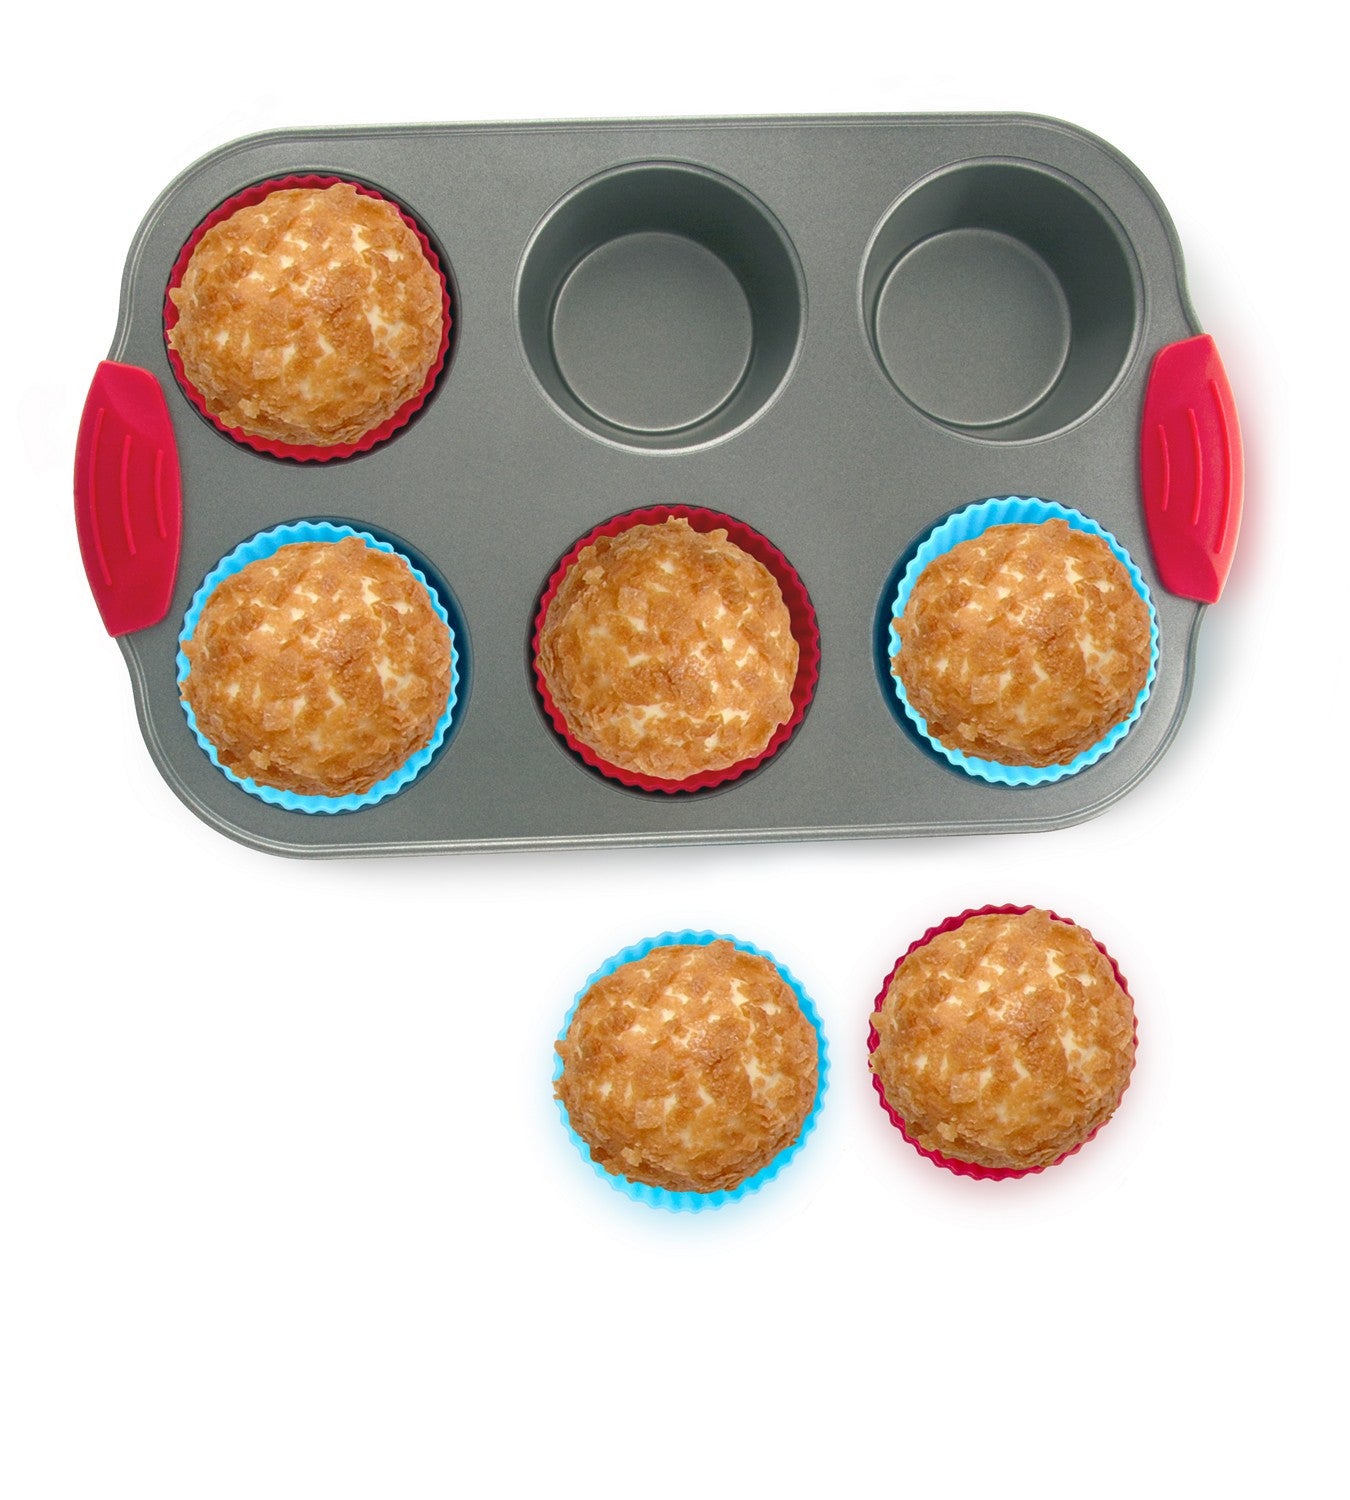 Choice 6 Cup 7 oz. Non-Stick Carbon Steel Jumbo Muffin / Cupcake